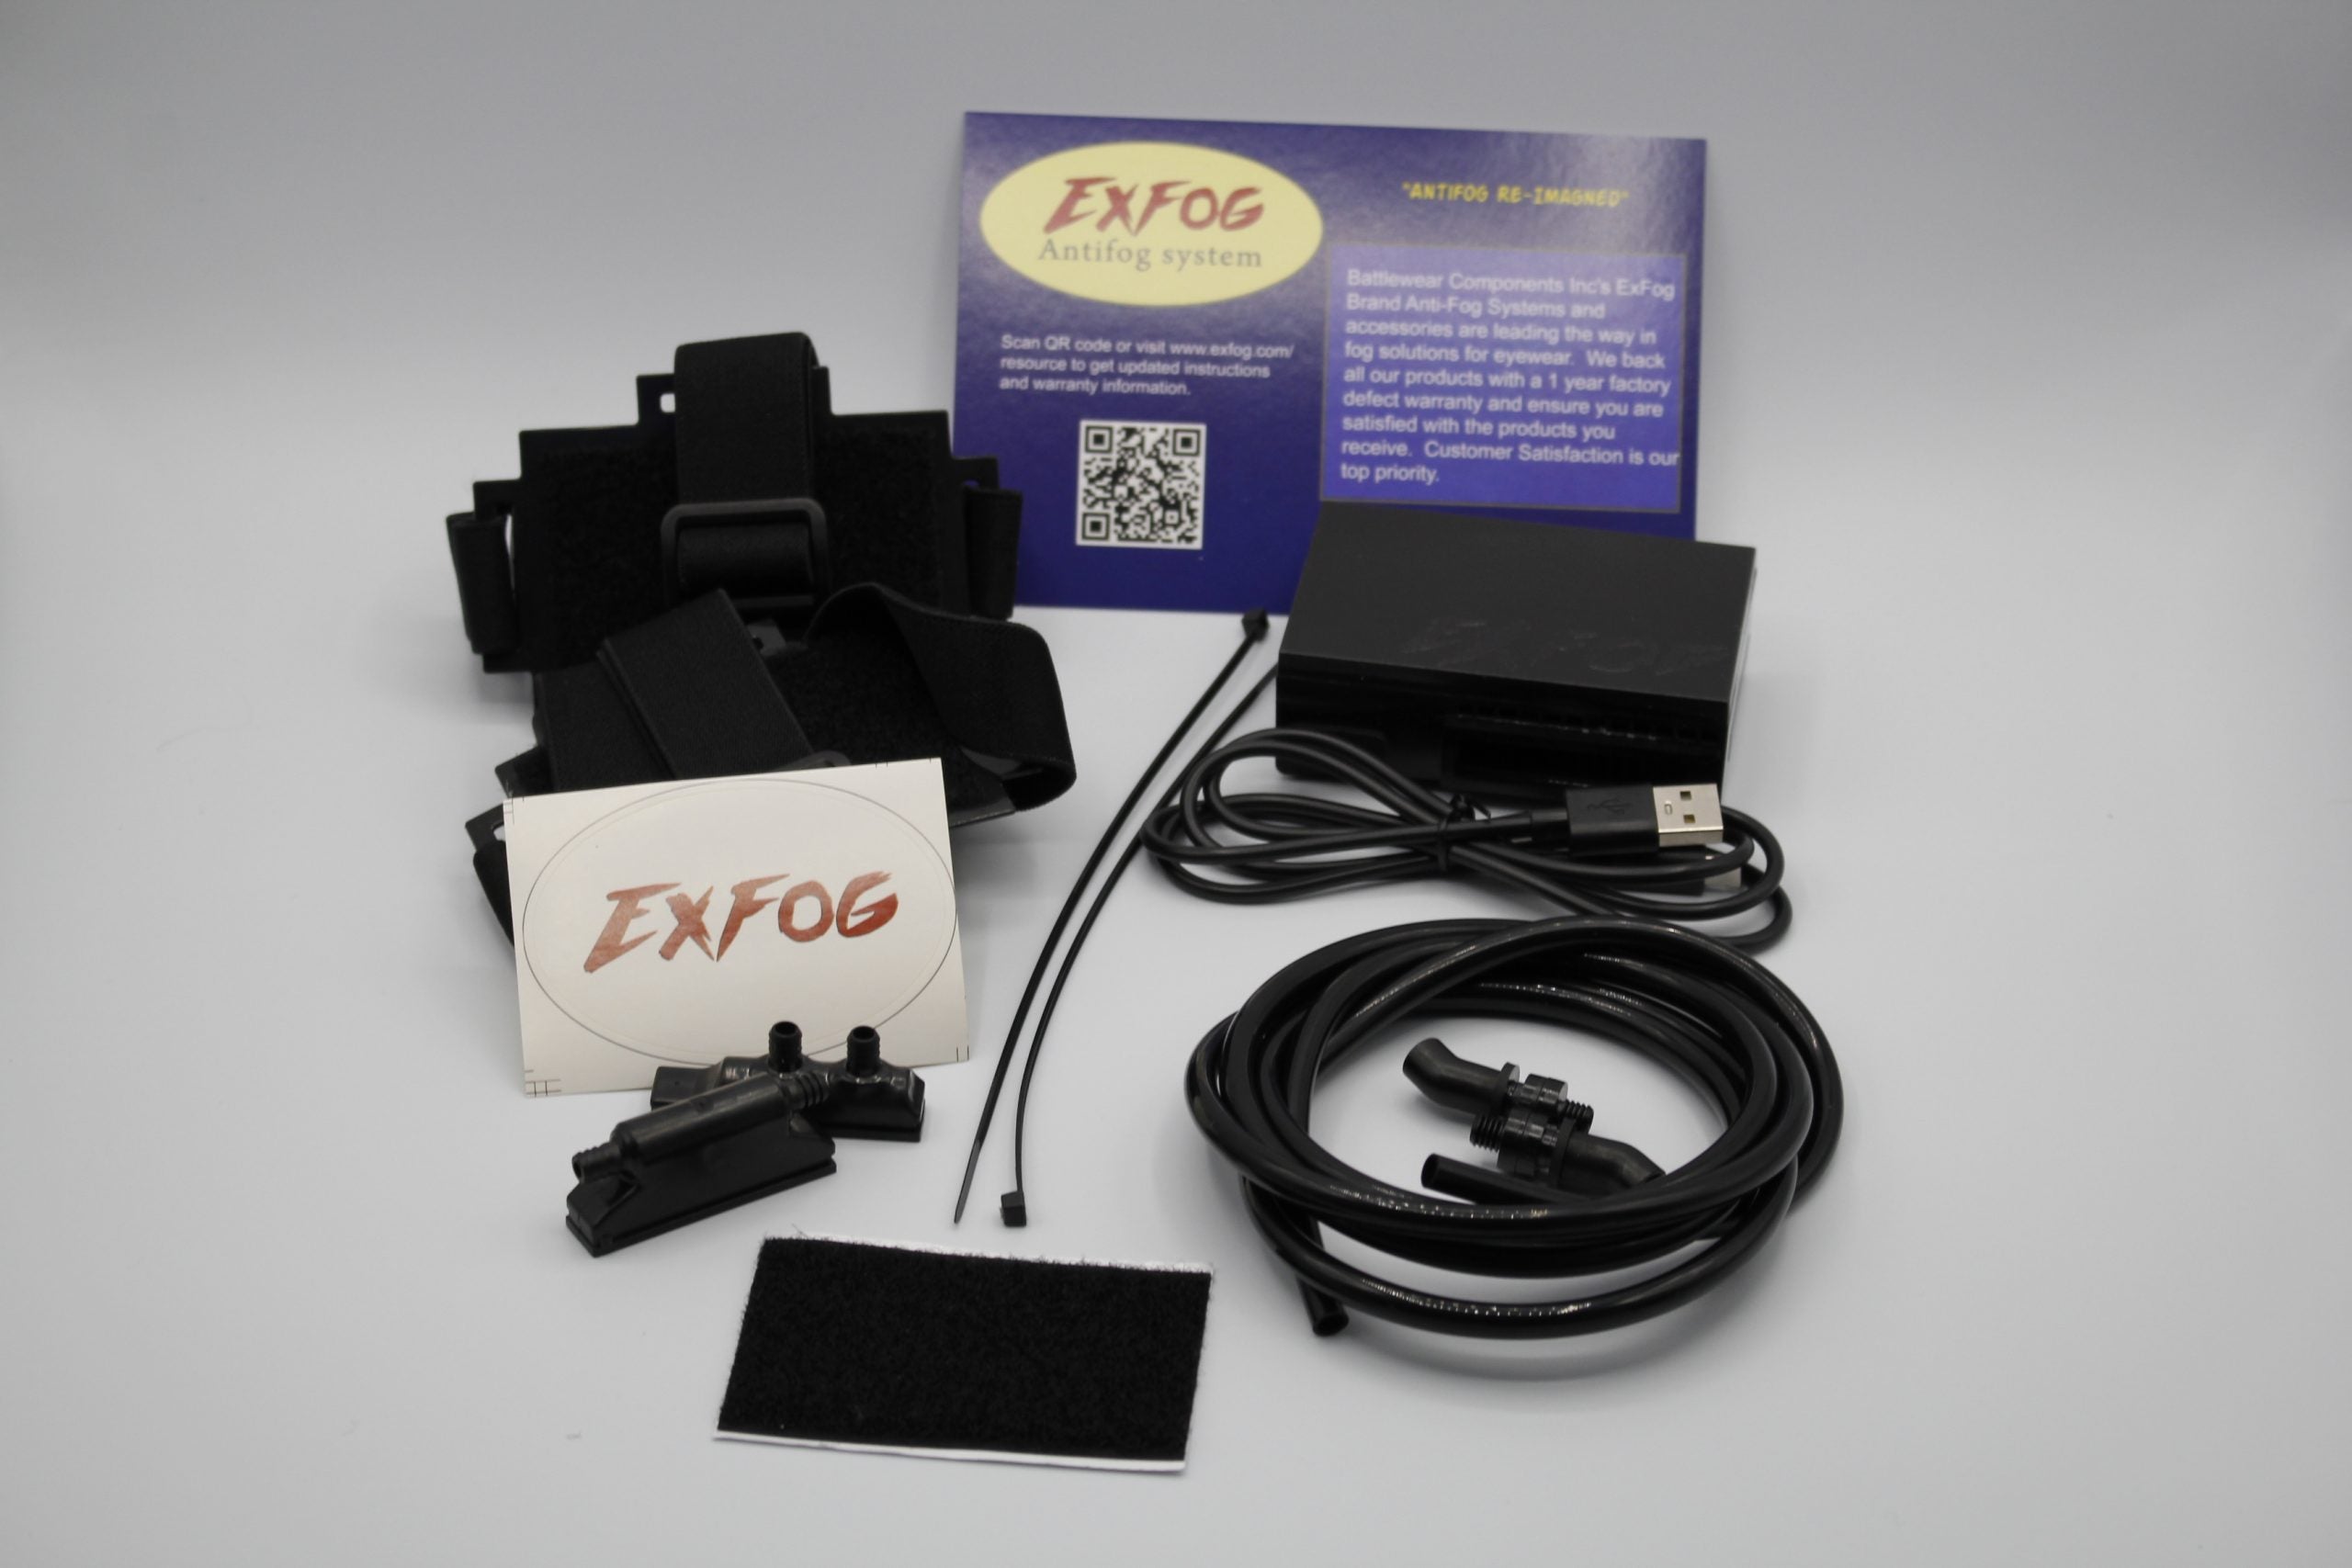 ExFog XT Antifog System (Standard Kit / Essential Kit)